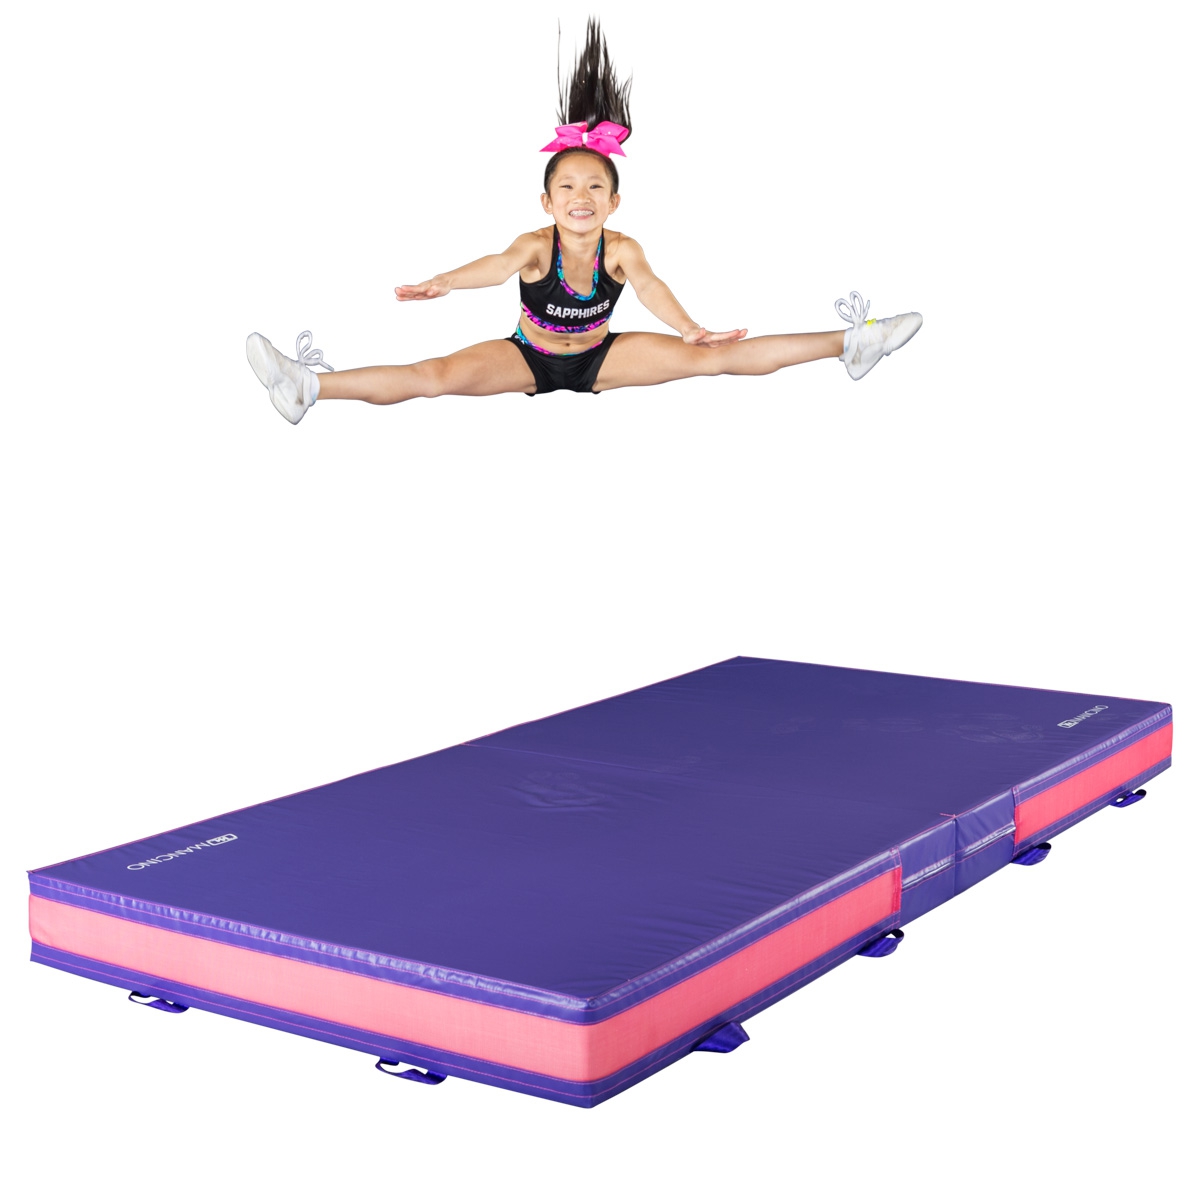 8 incher purple landing mat